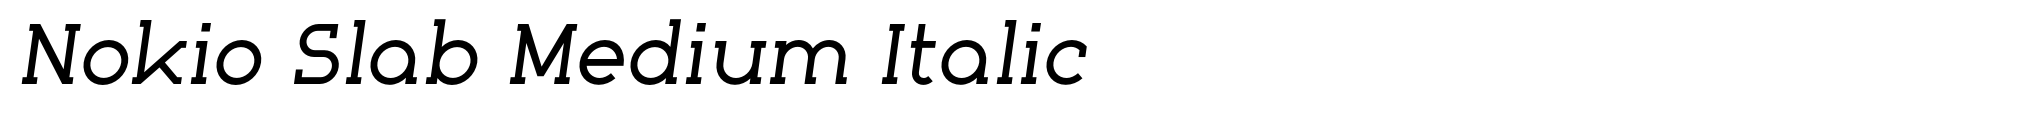 Nokio Slab Medium Italic image